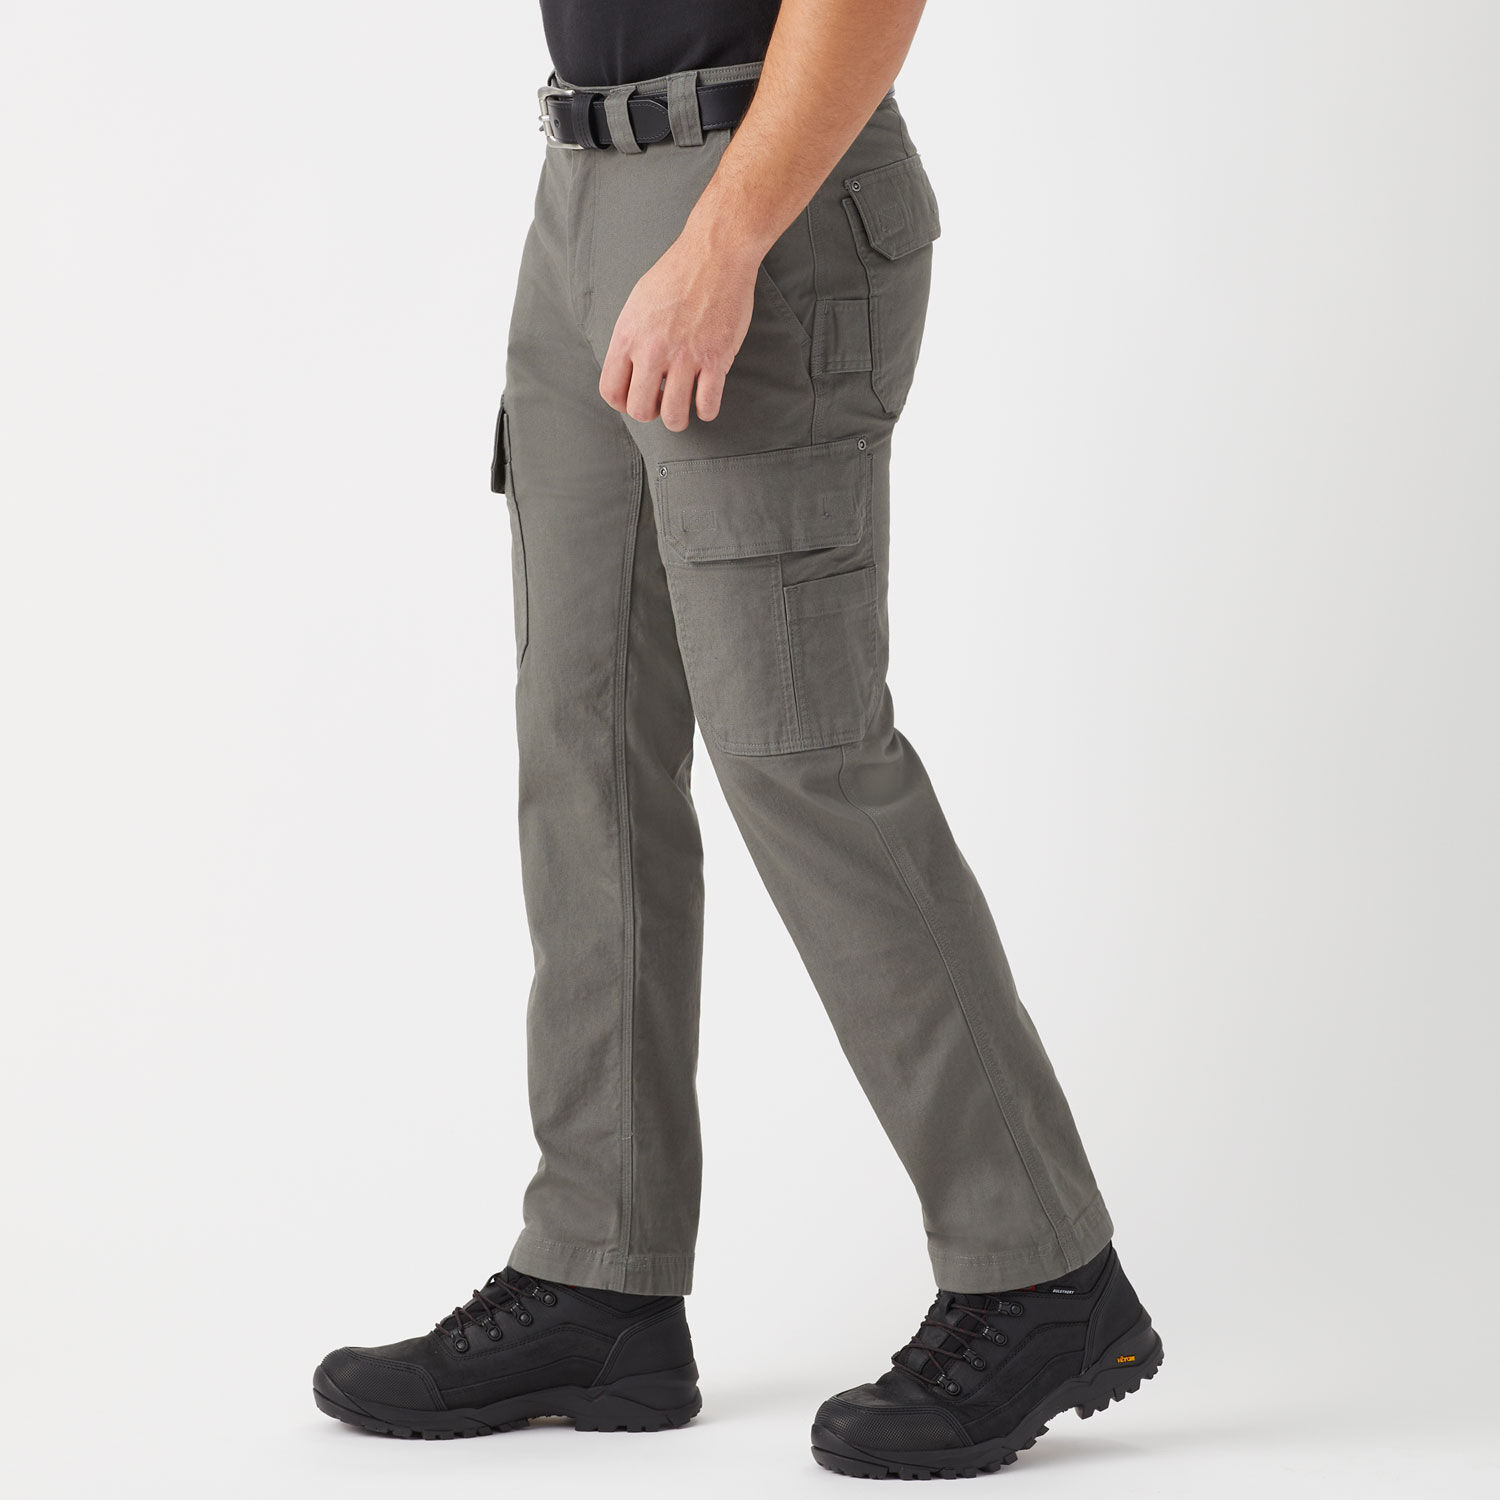 Mens Skinny Cargo Combat Trousers Comfy Slim Fit Jogger Tracksuit Bottoms  Pants | eBay